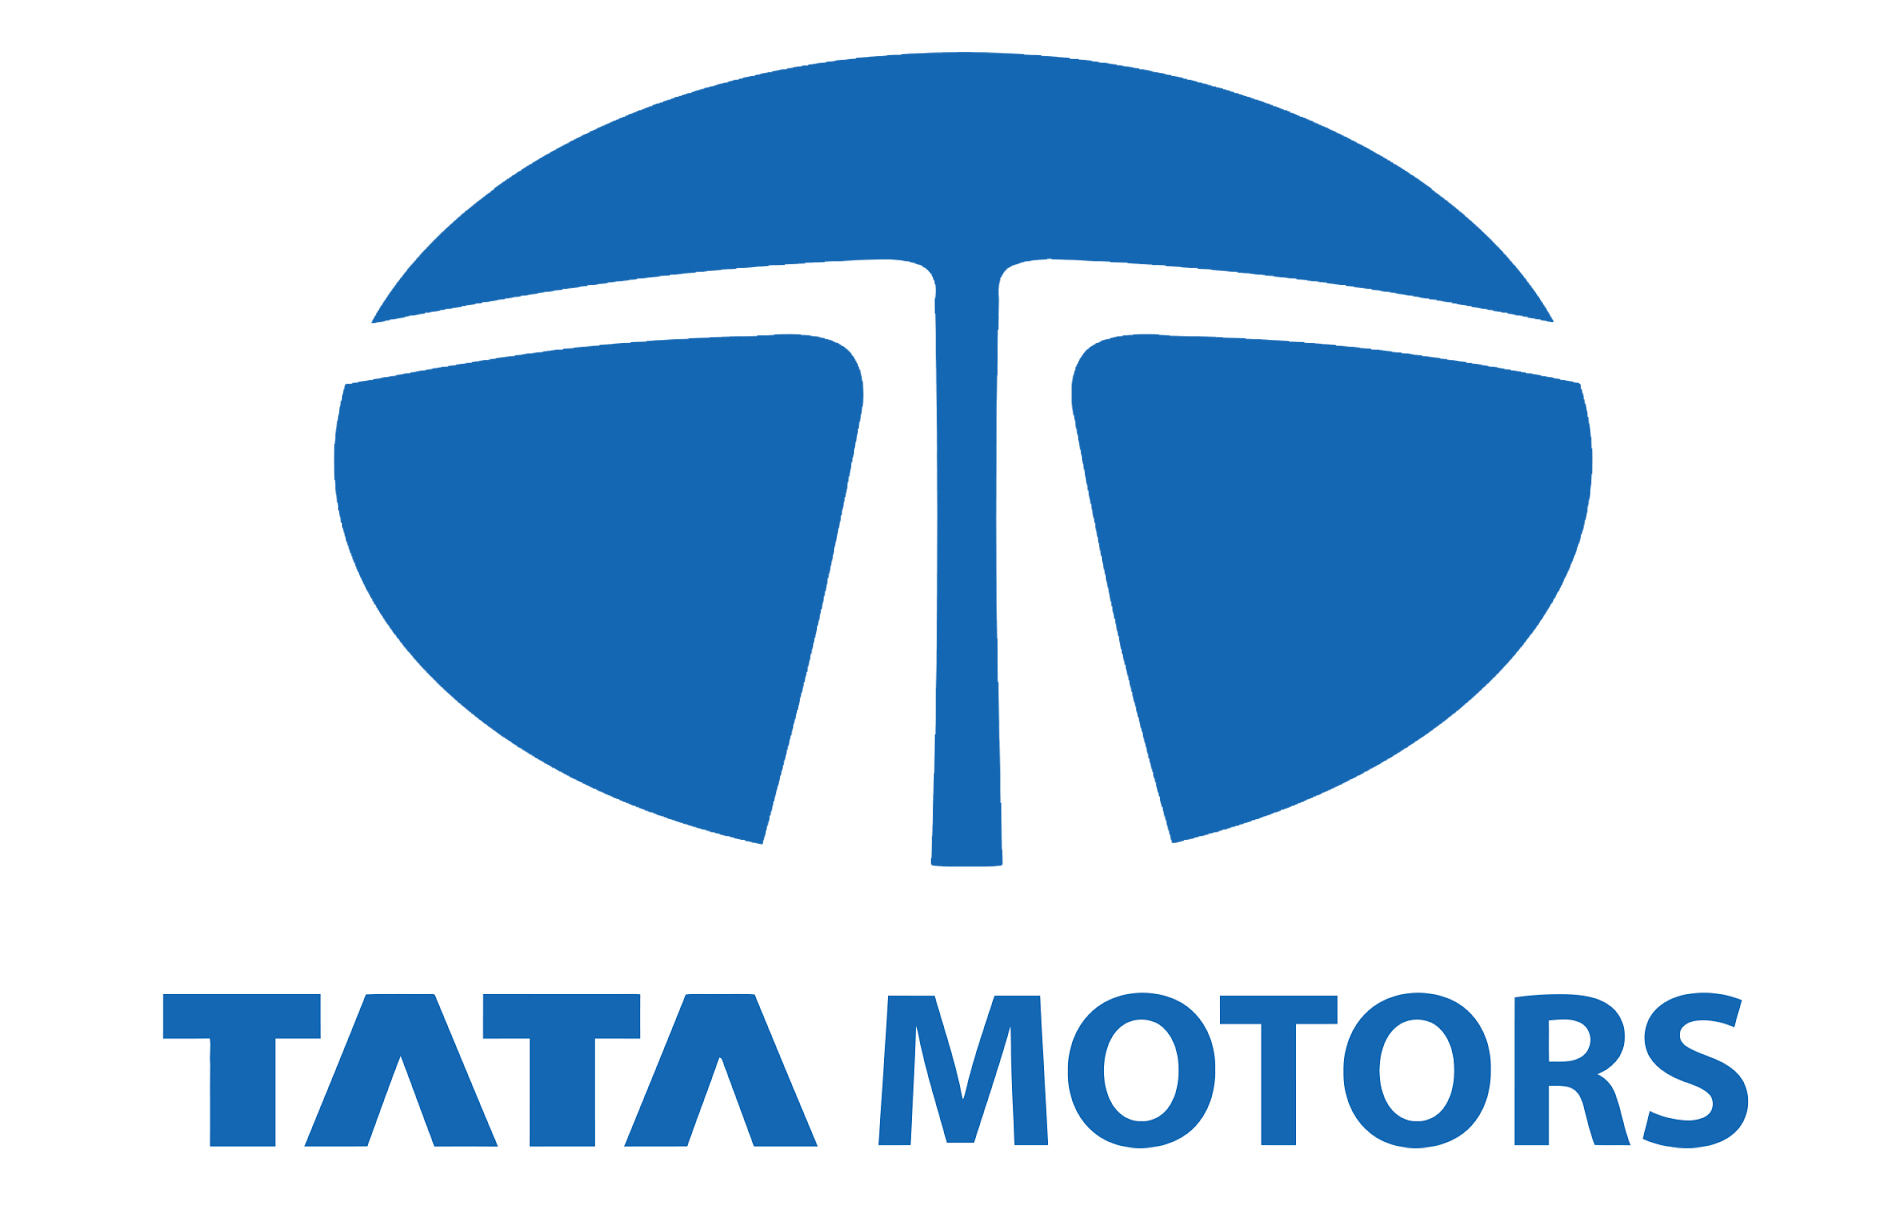 Tata Motors Cars Showroom - Surya Automobiles|Show Room|Automotive